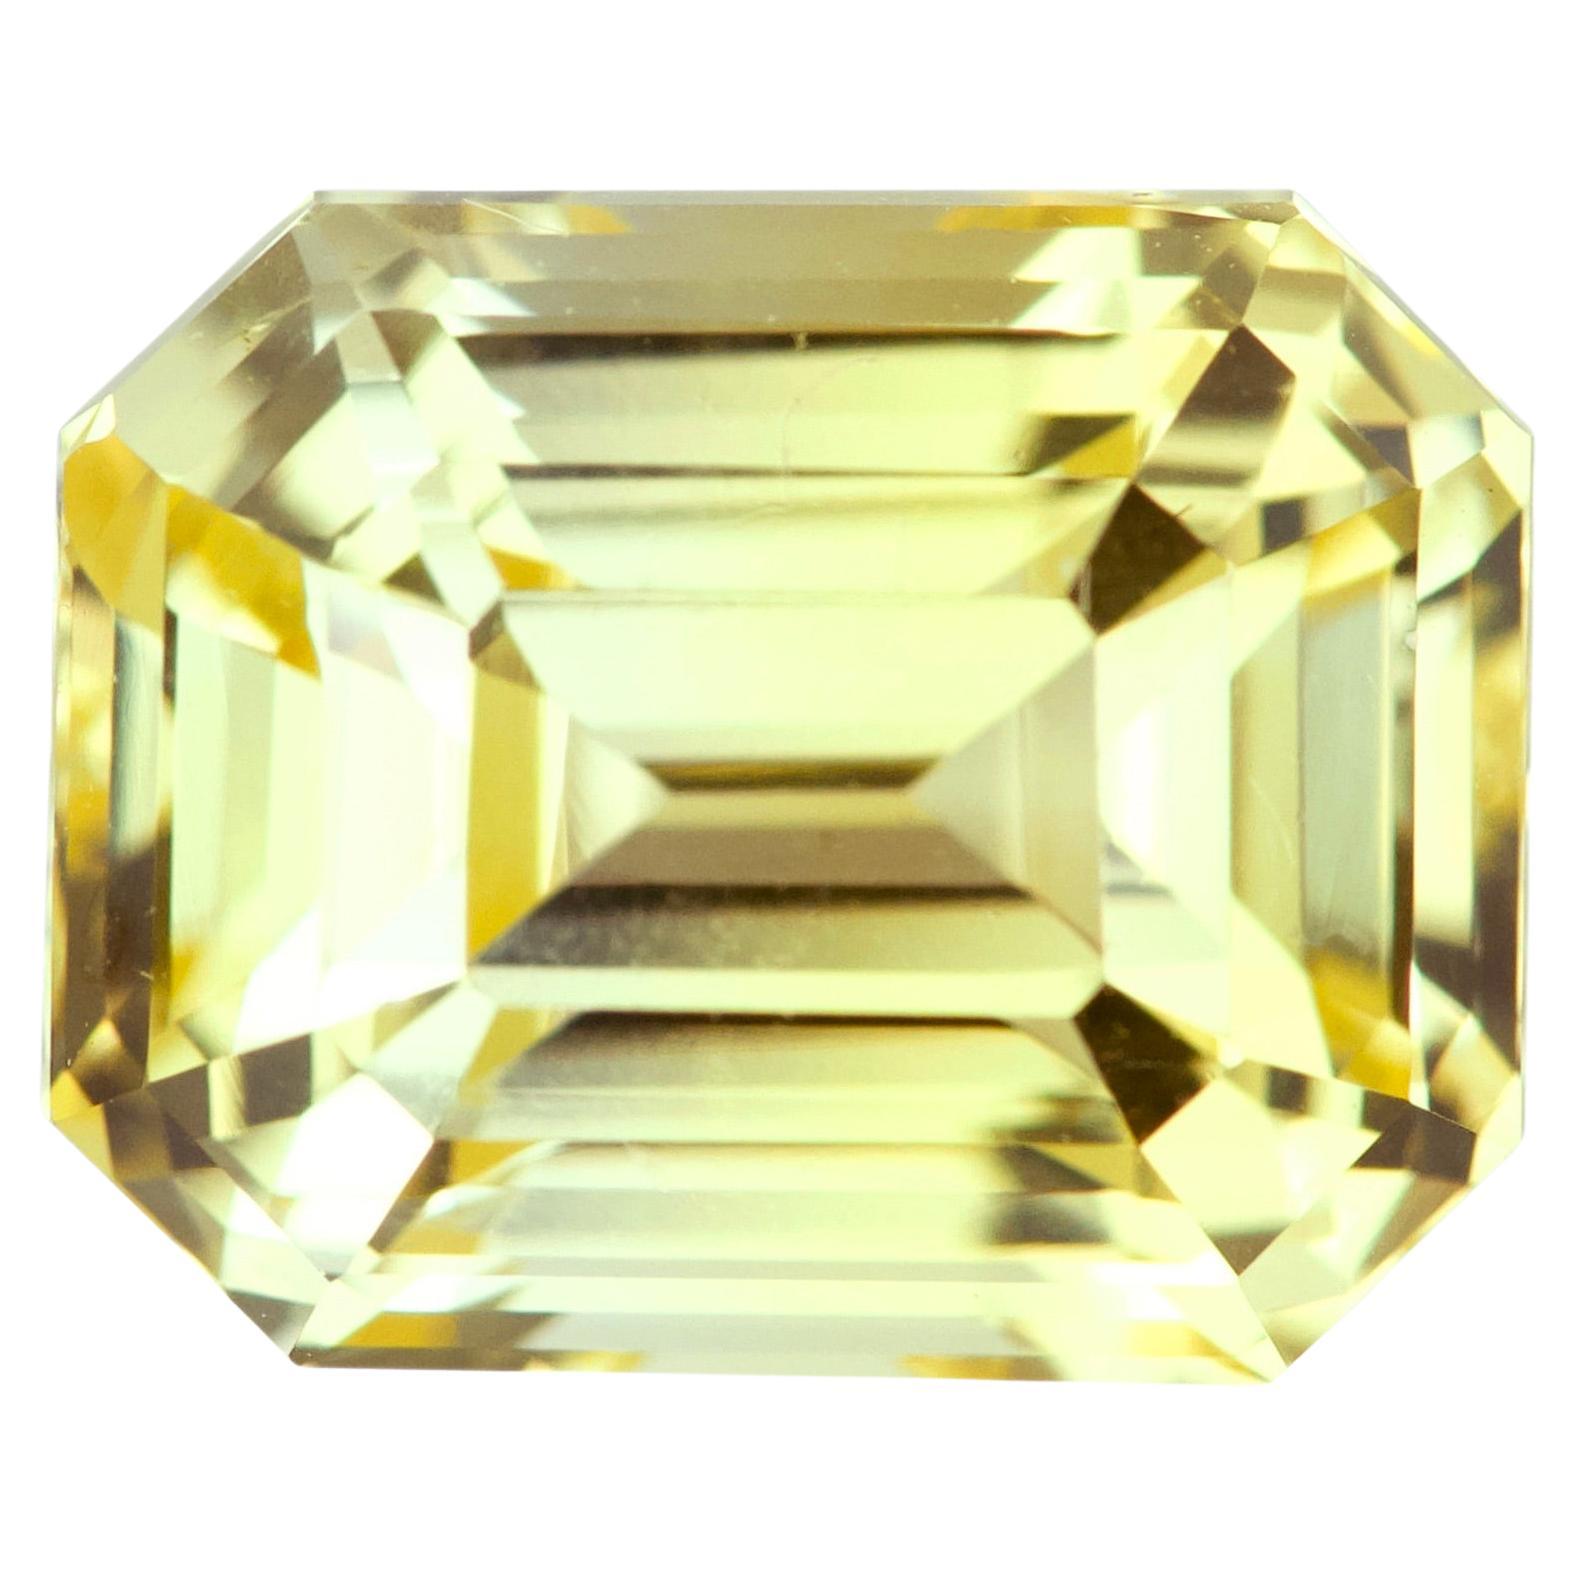 Vivid Yellow 5.09ct Sapphire Emerald Cut Natural Unheated, Loose Gemstone (pierre précieuse non chauffée) en vente